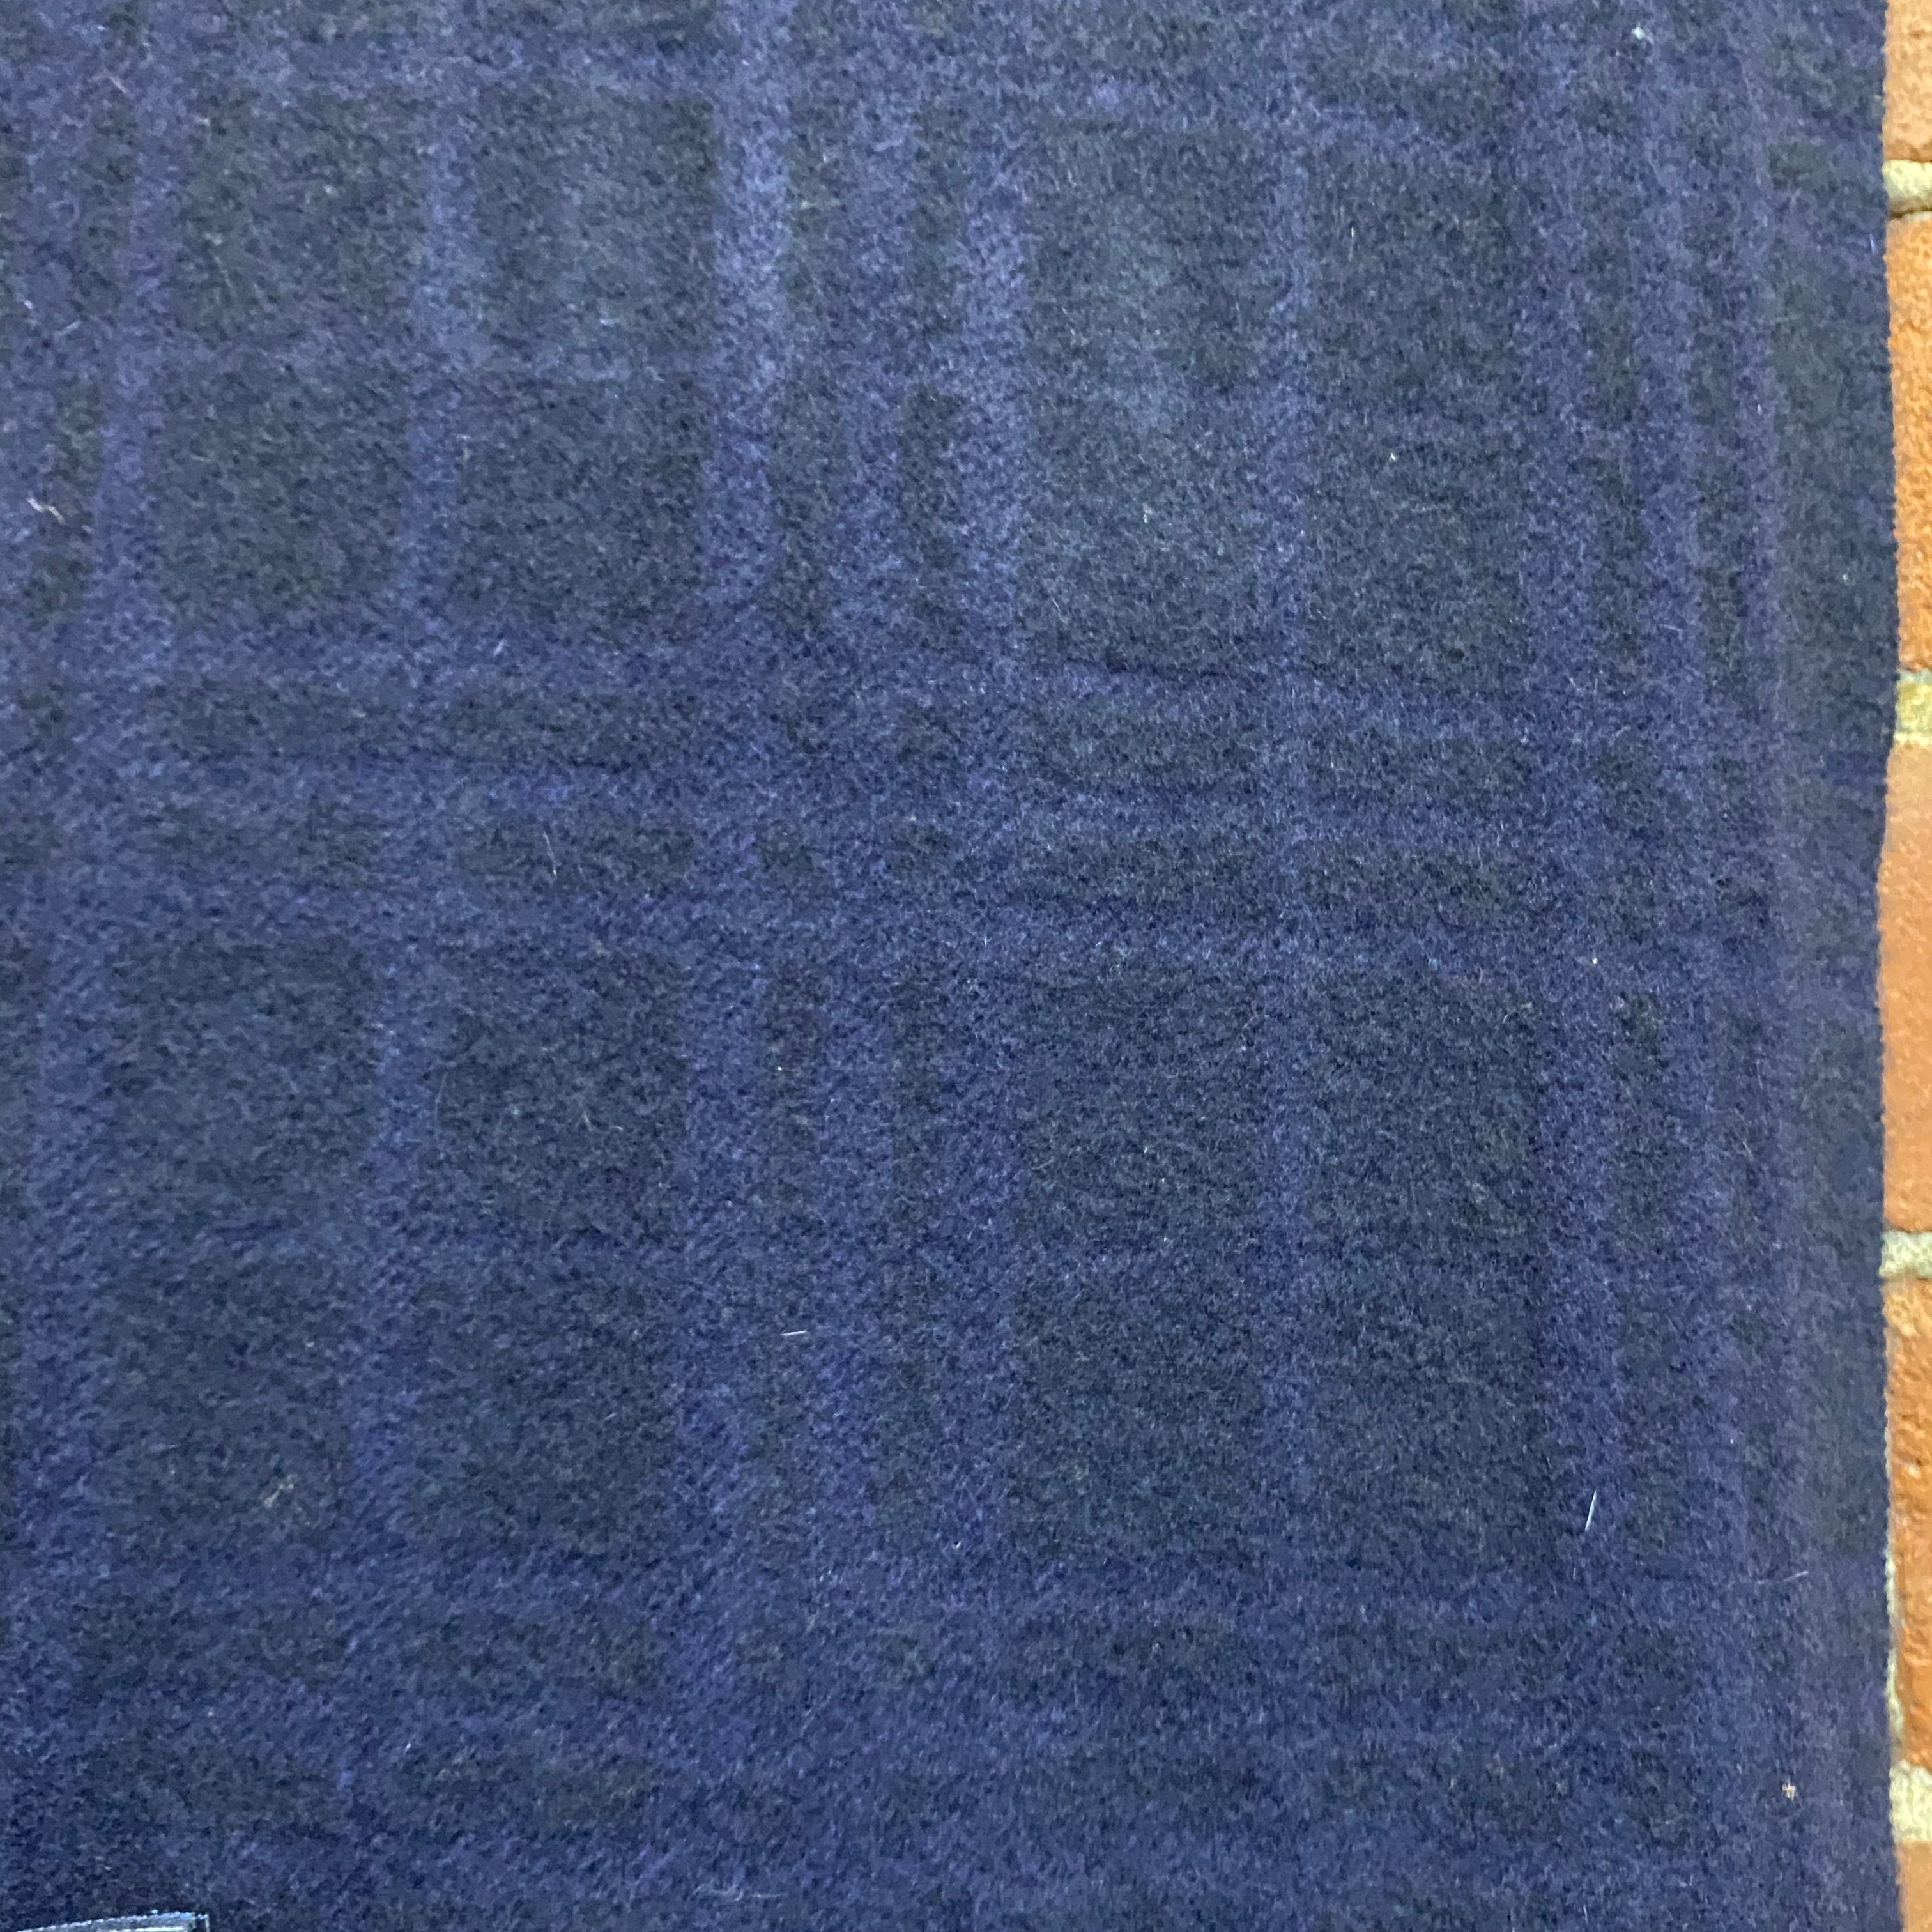 BURBERRY navy blue Cashmere scarf